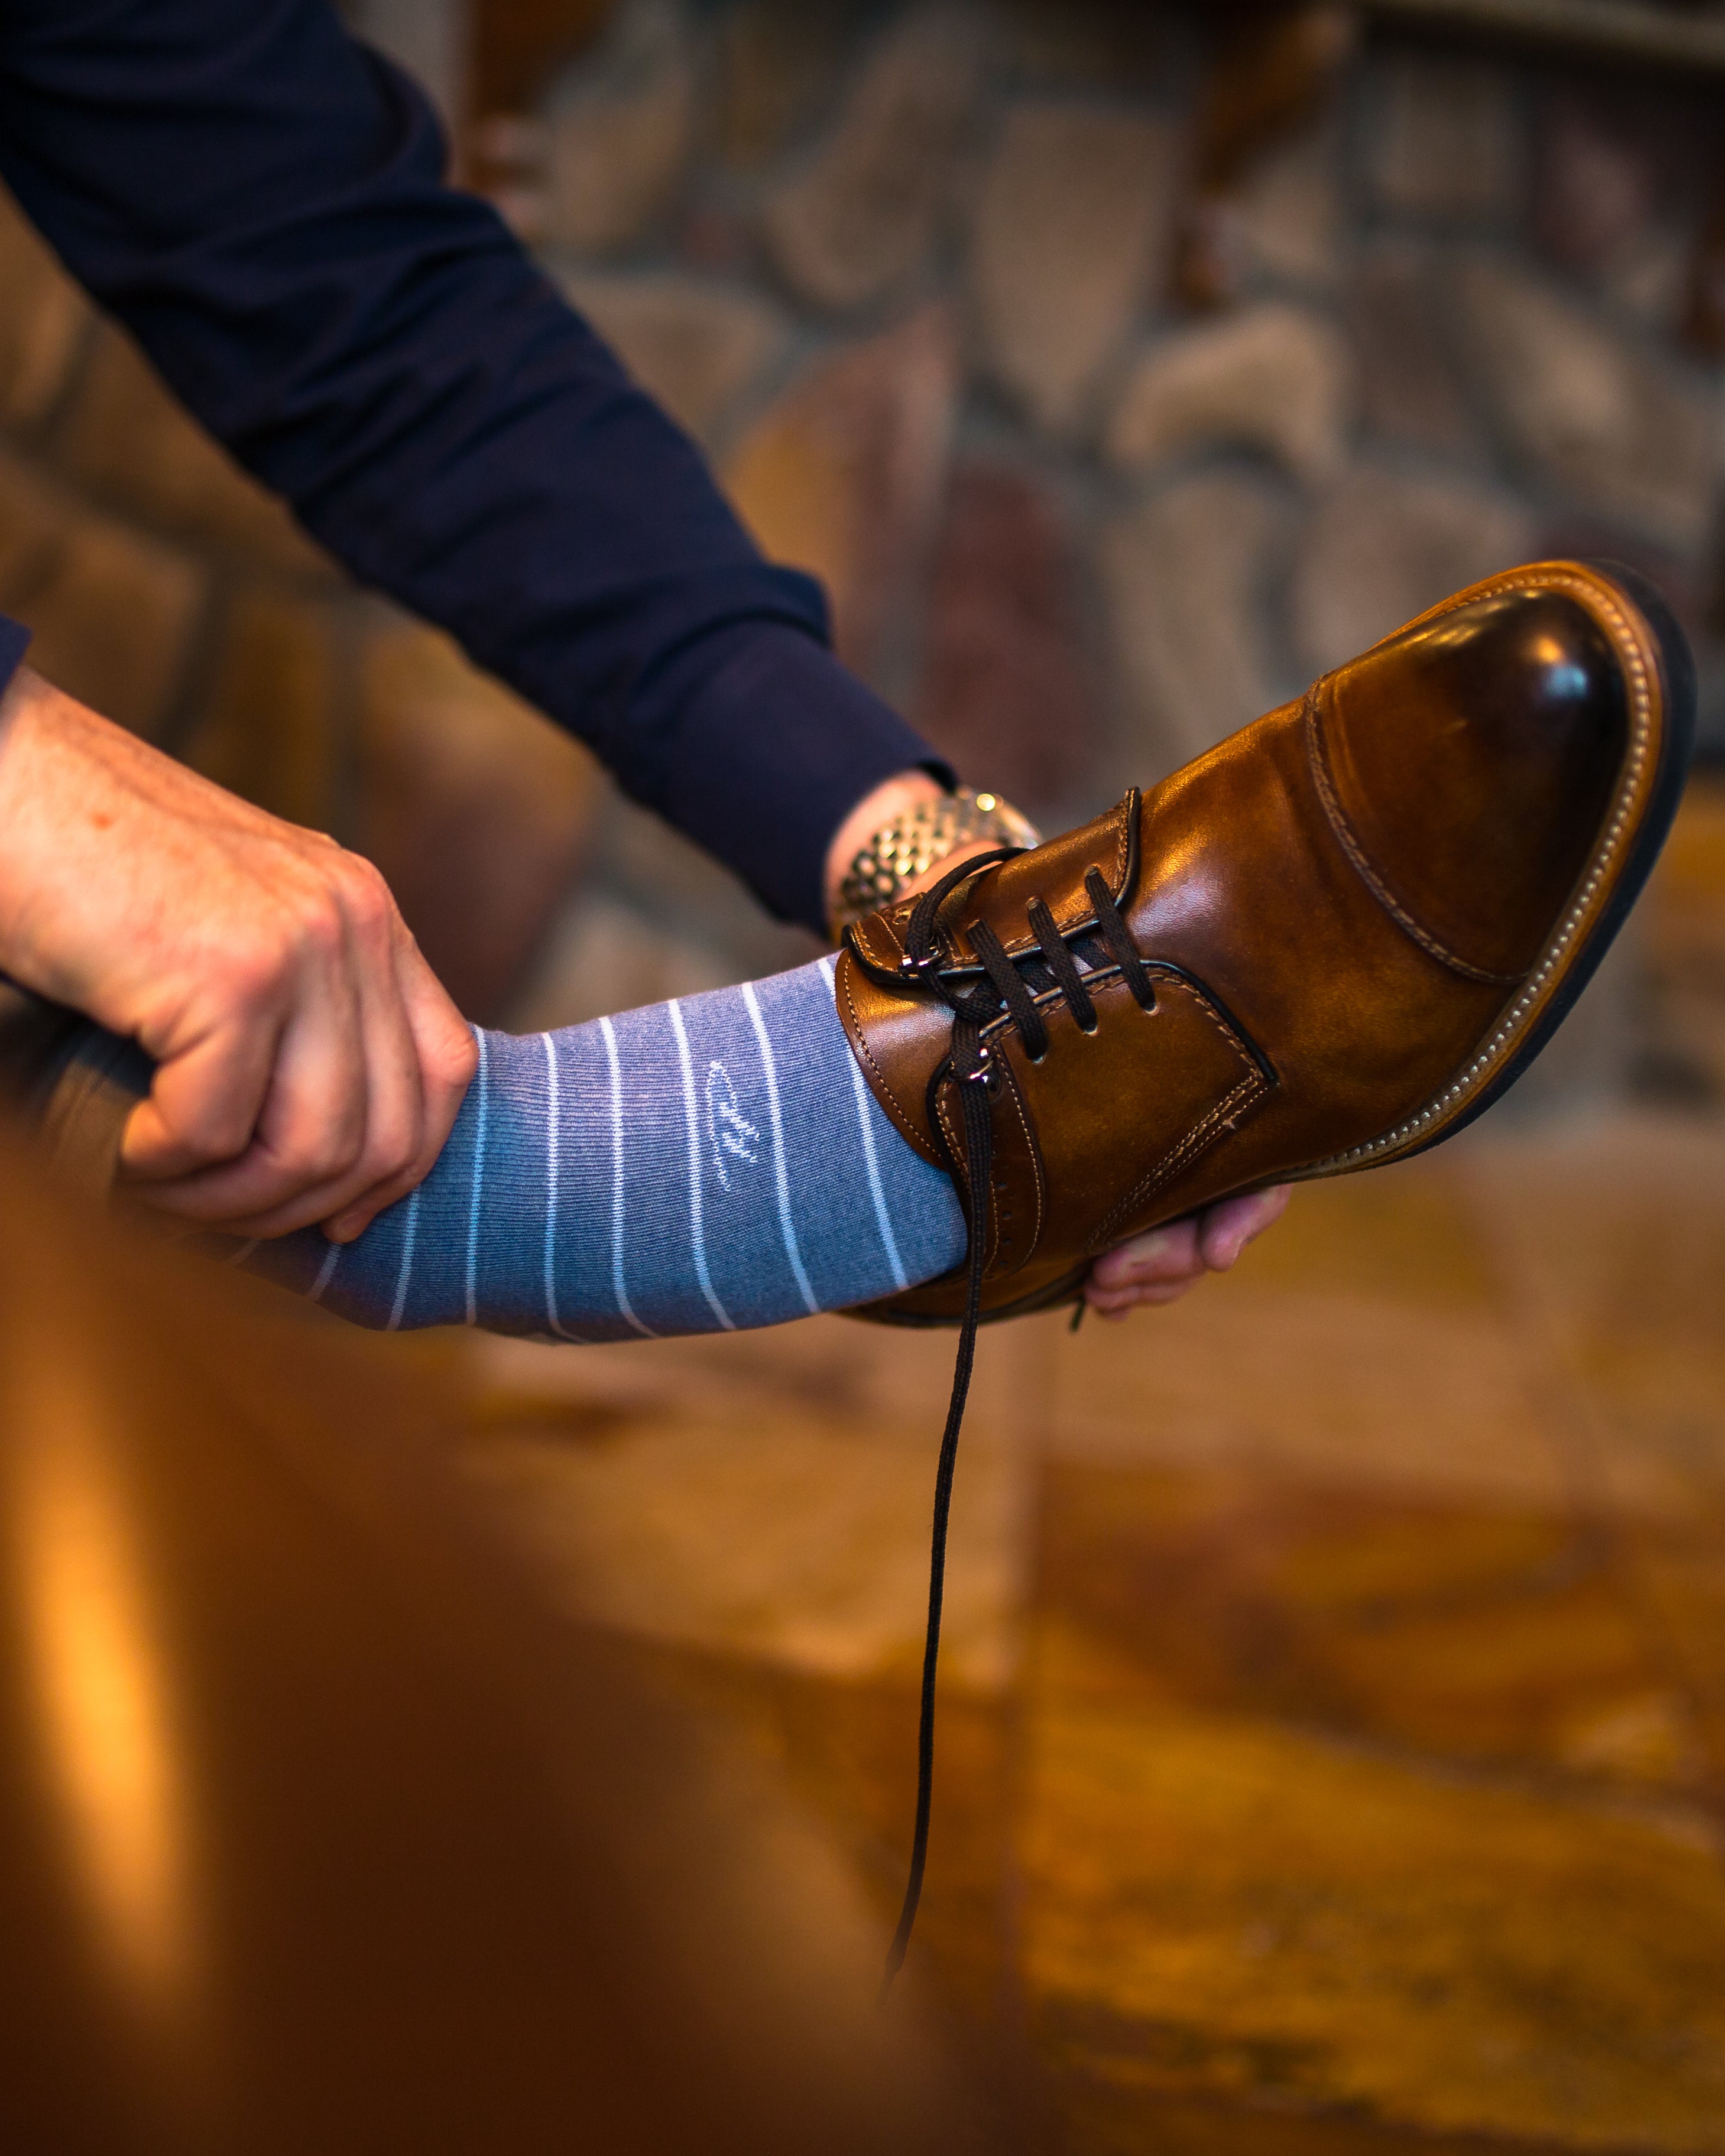 blue over the calf dress socks with light blue stripes, brown dress shoes, a watch, navy blue shirt